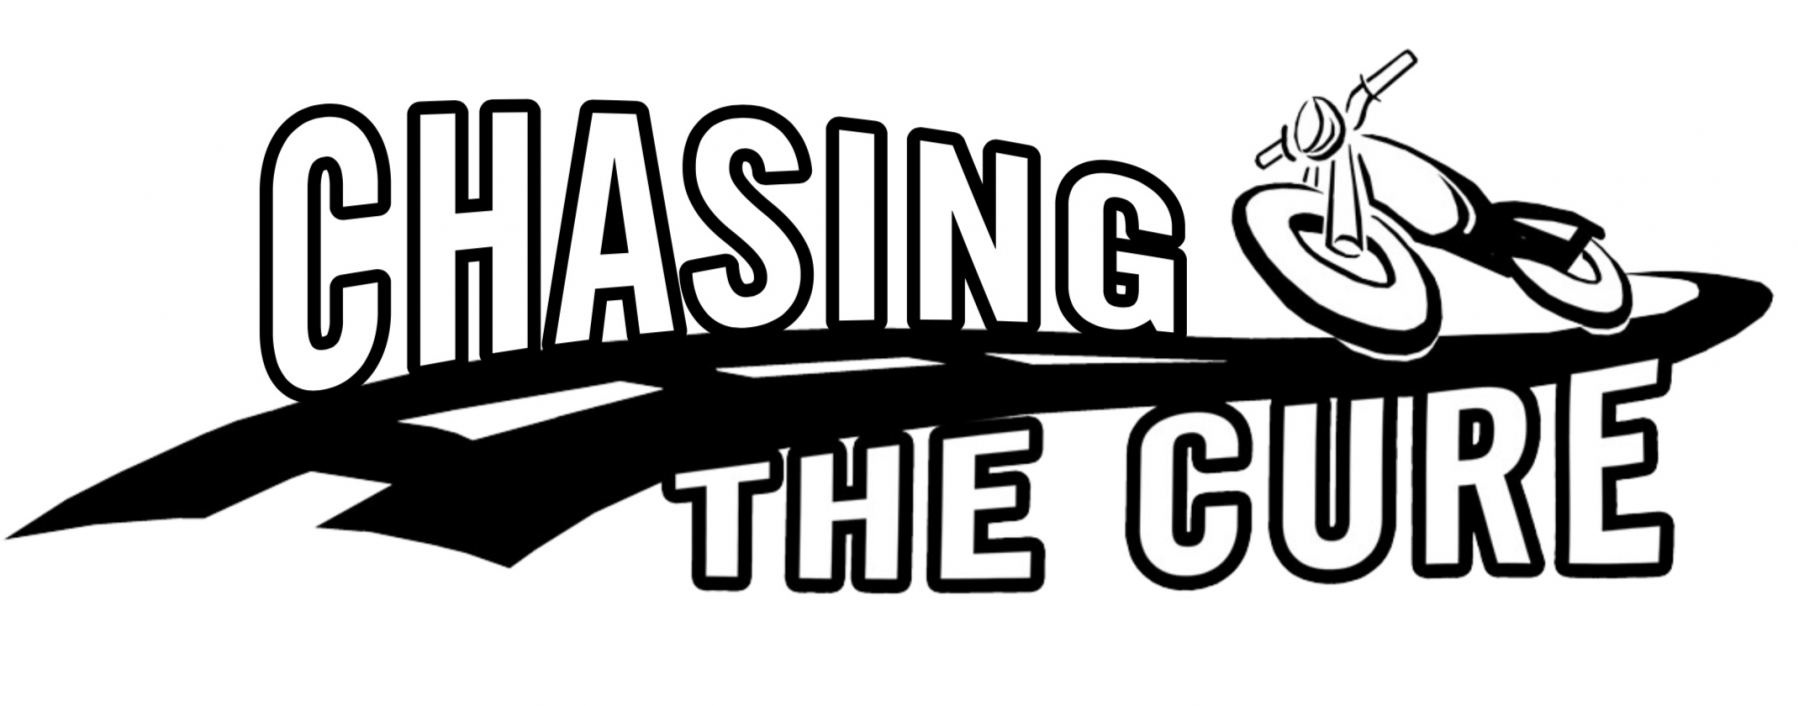 Longhaulpaul's Chasing the Cure Logo